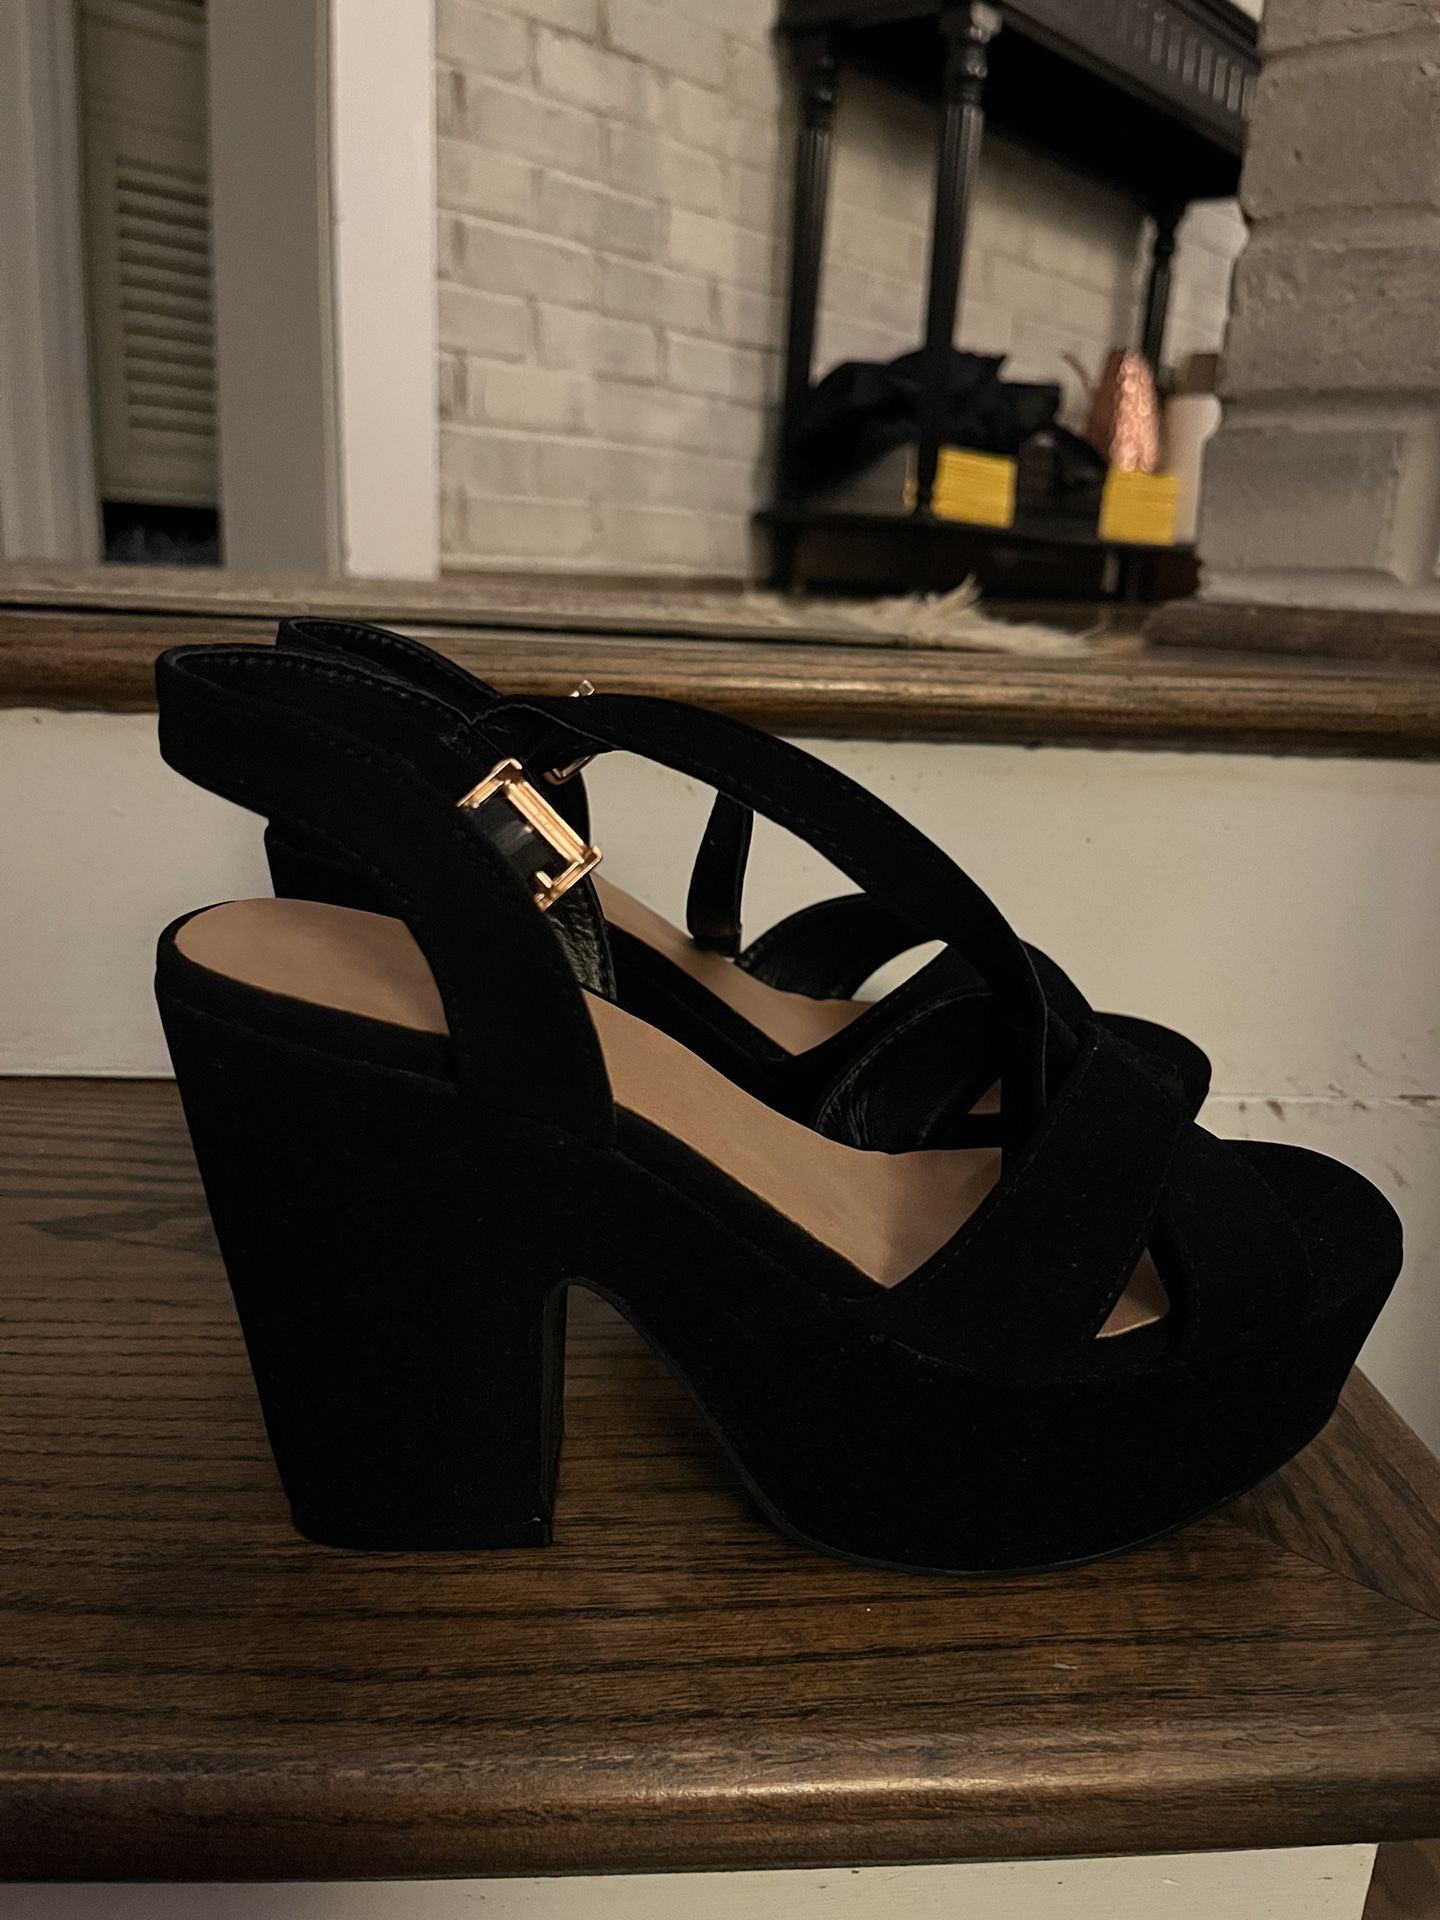 gorg never worn almost 5 inch platform black suede look heels women’s size 7 sandal open toe shoes